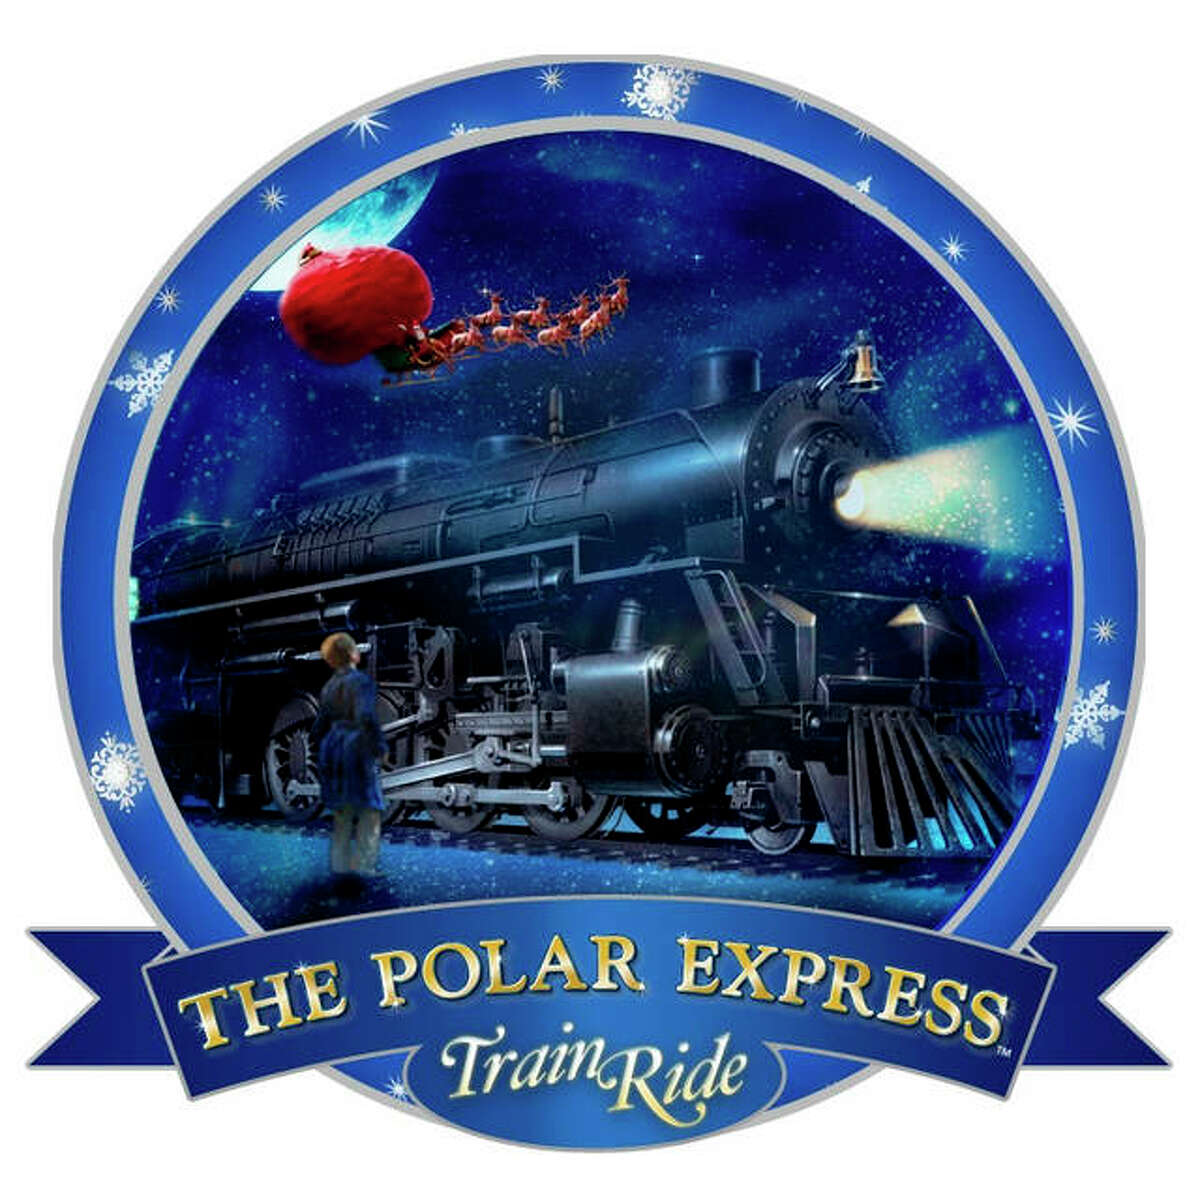 The Polar Express Train Ride takes families to the ‘North Pole’ through